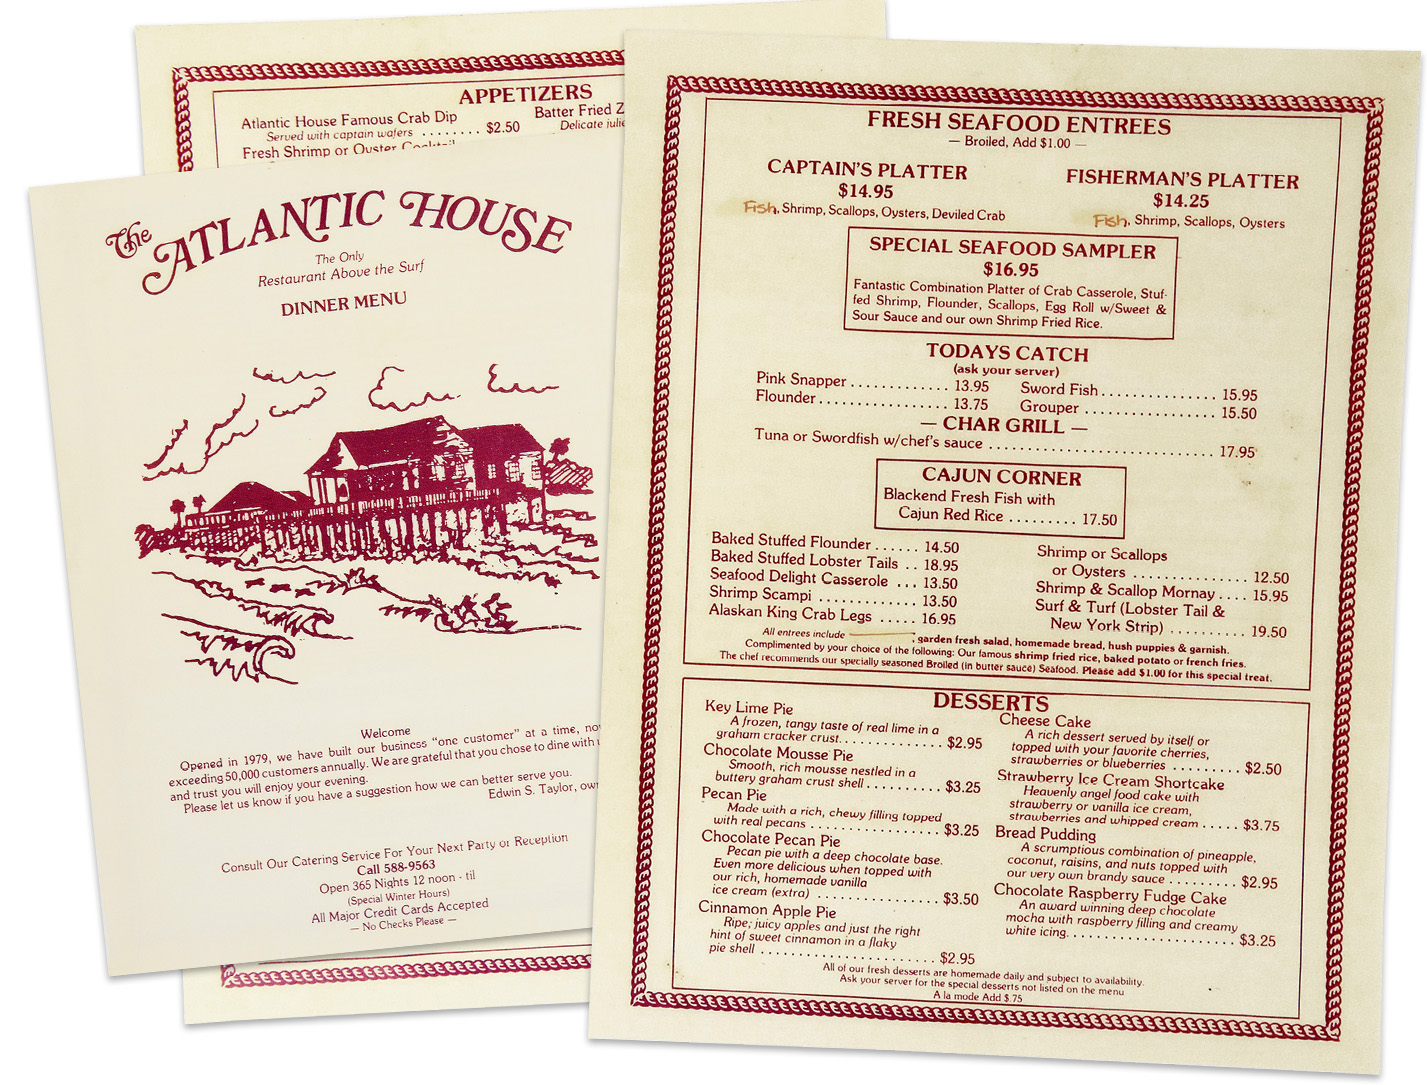 The Atlantic House menu